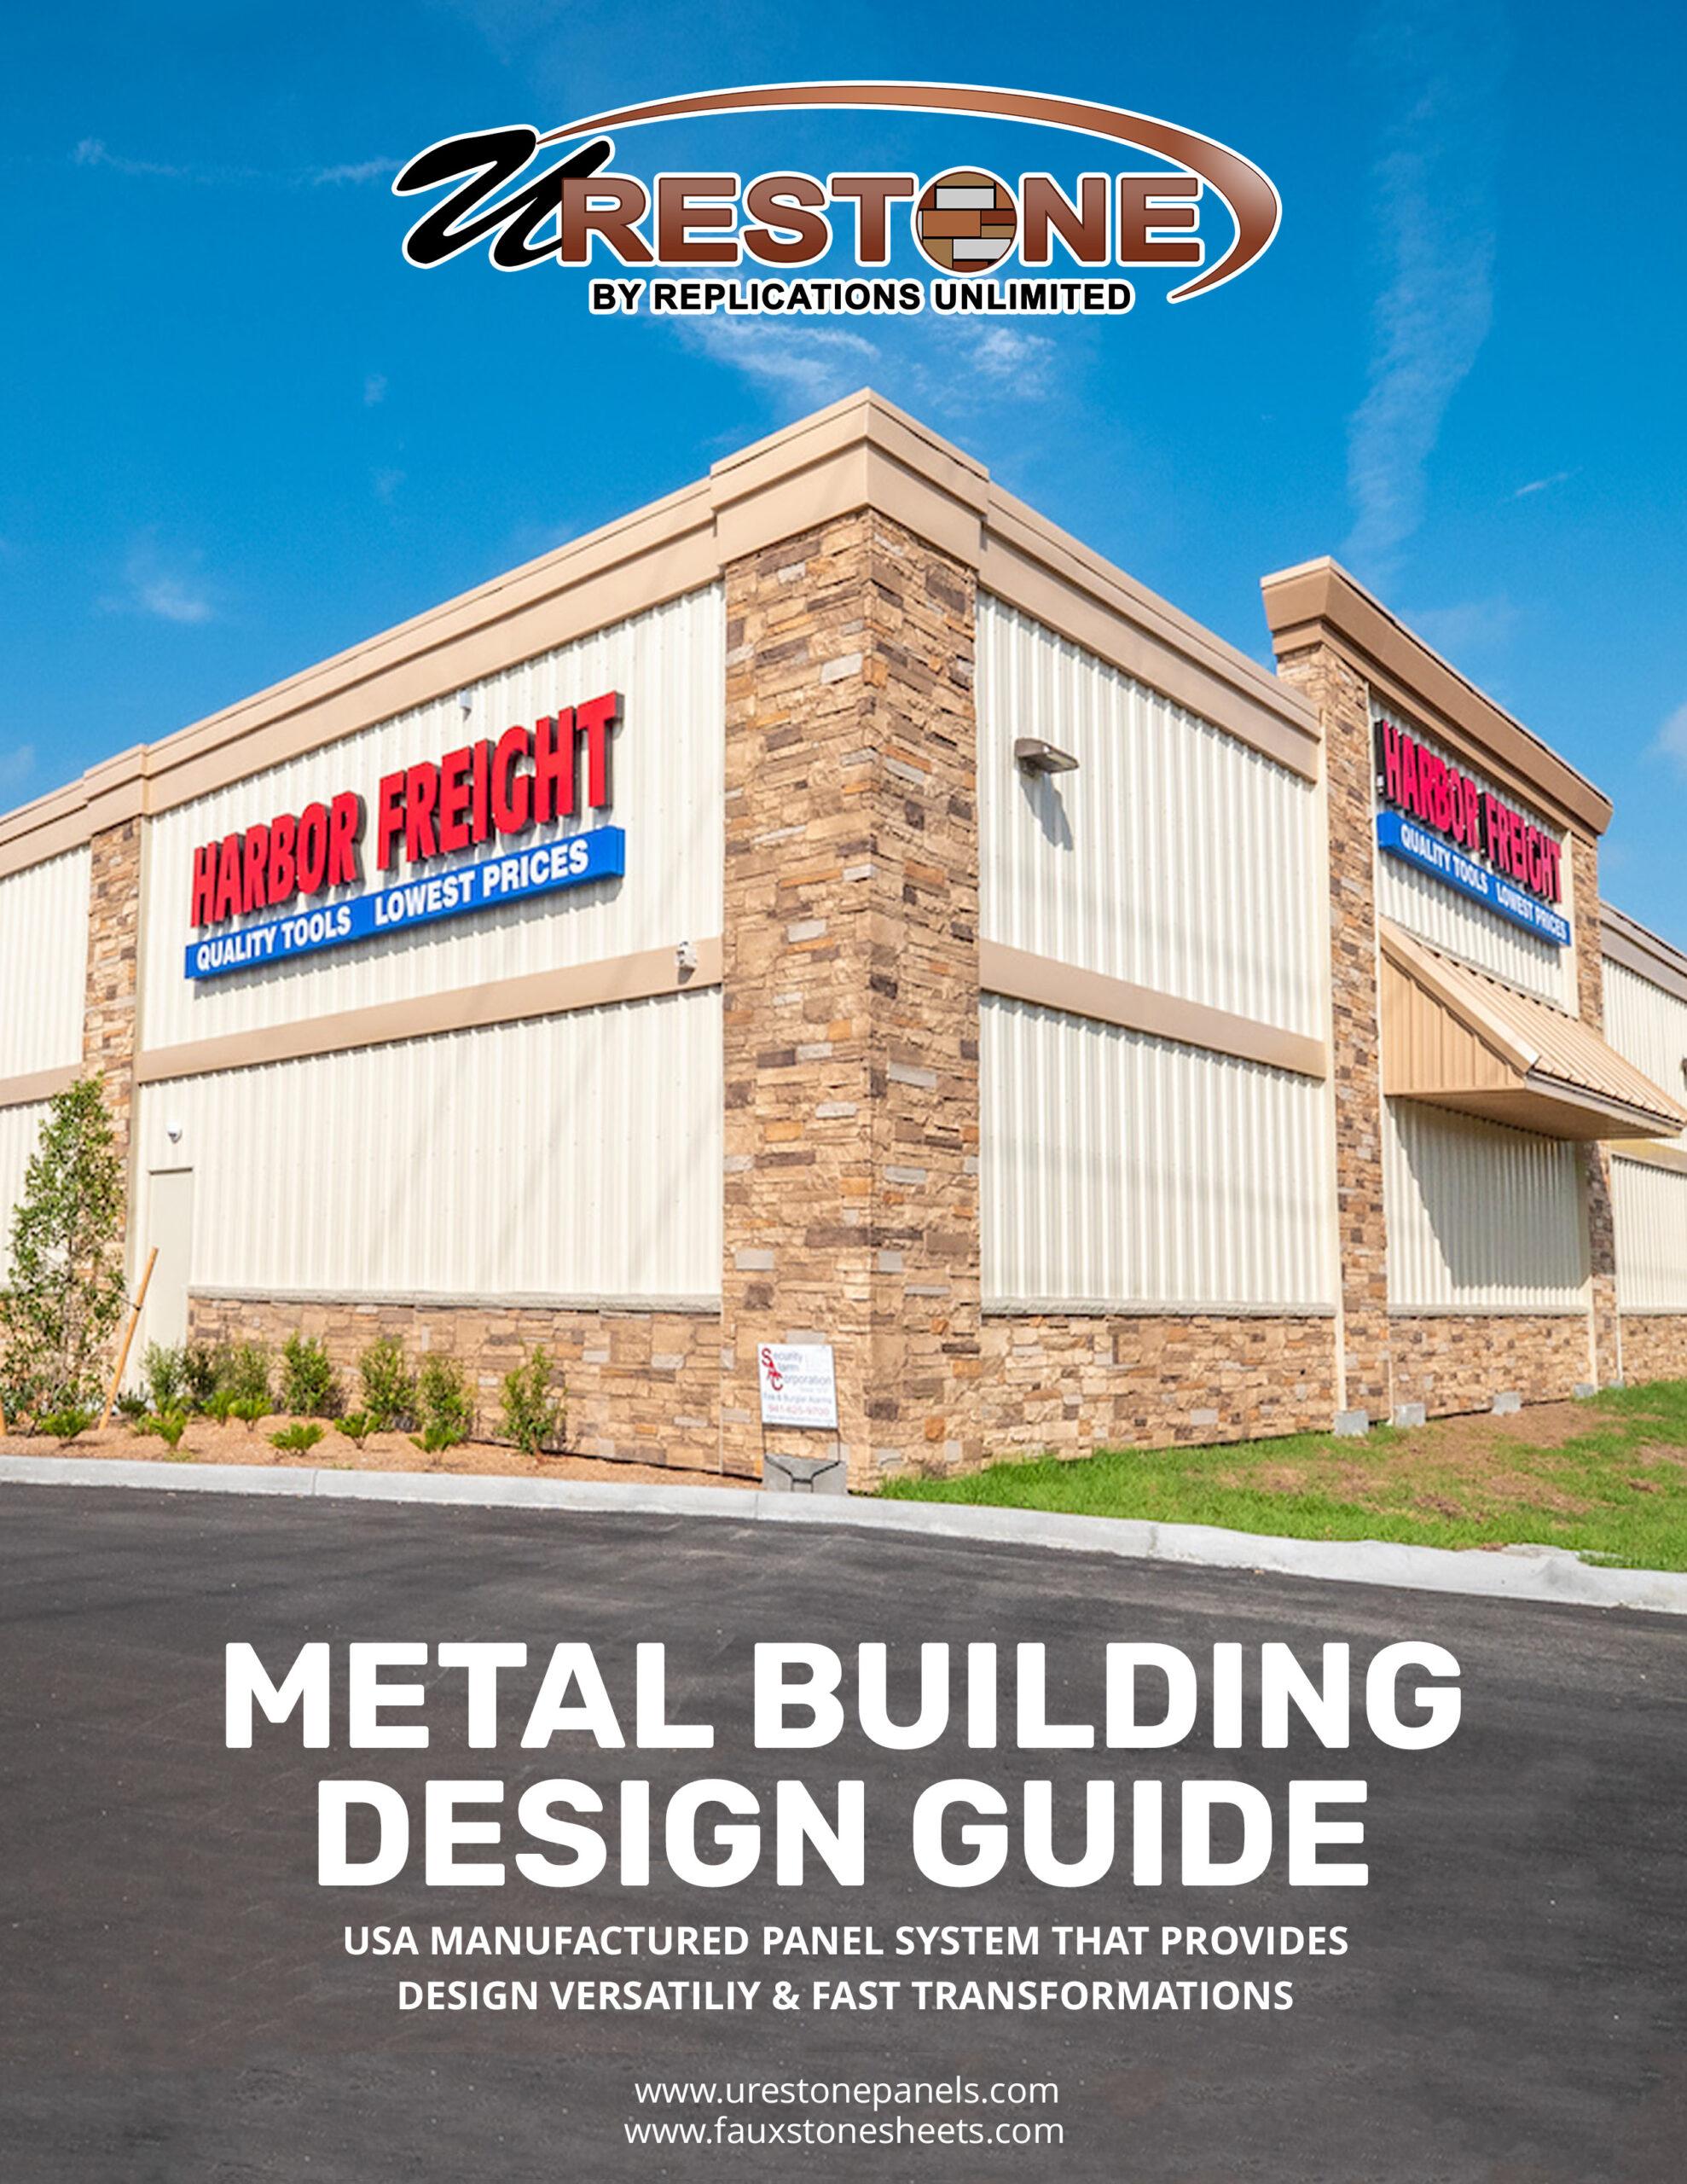 Metal Building Design Guide Cover